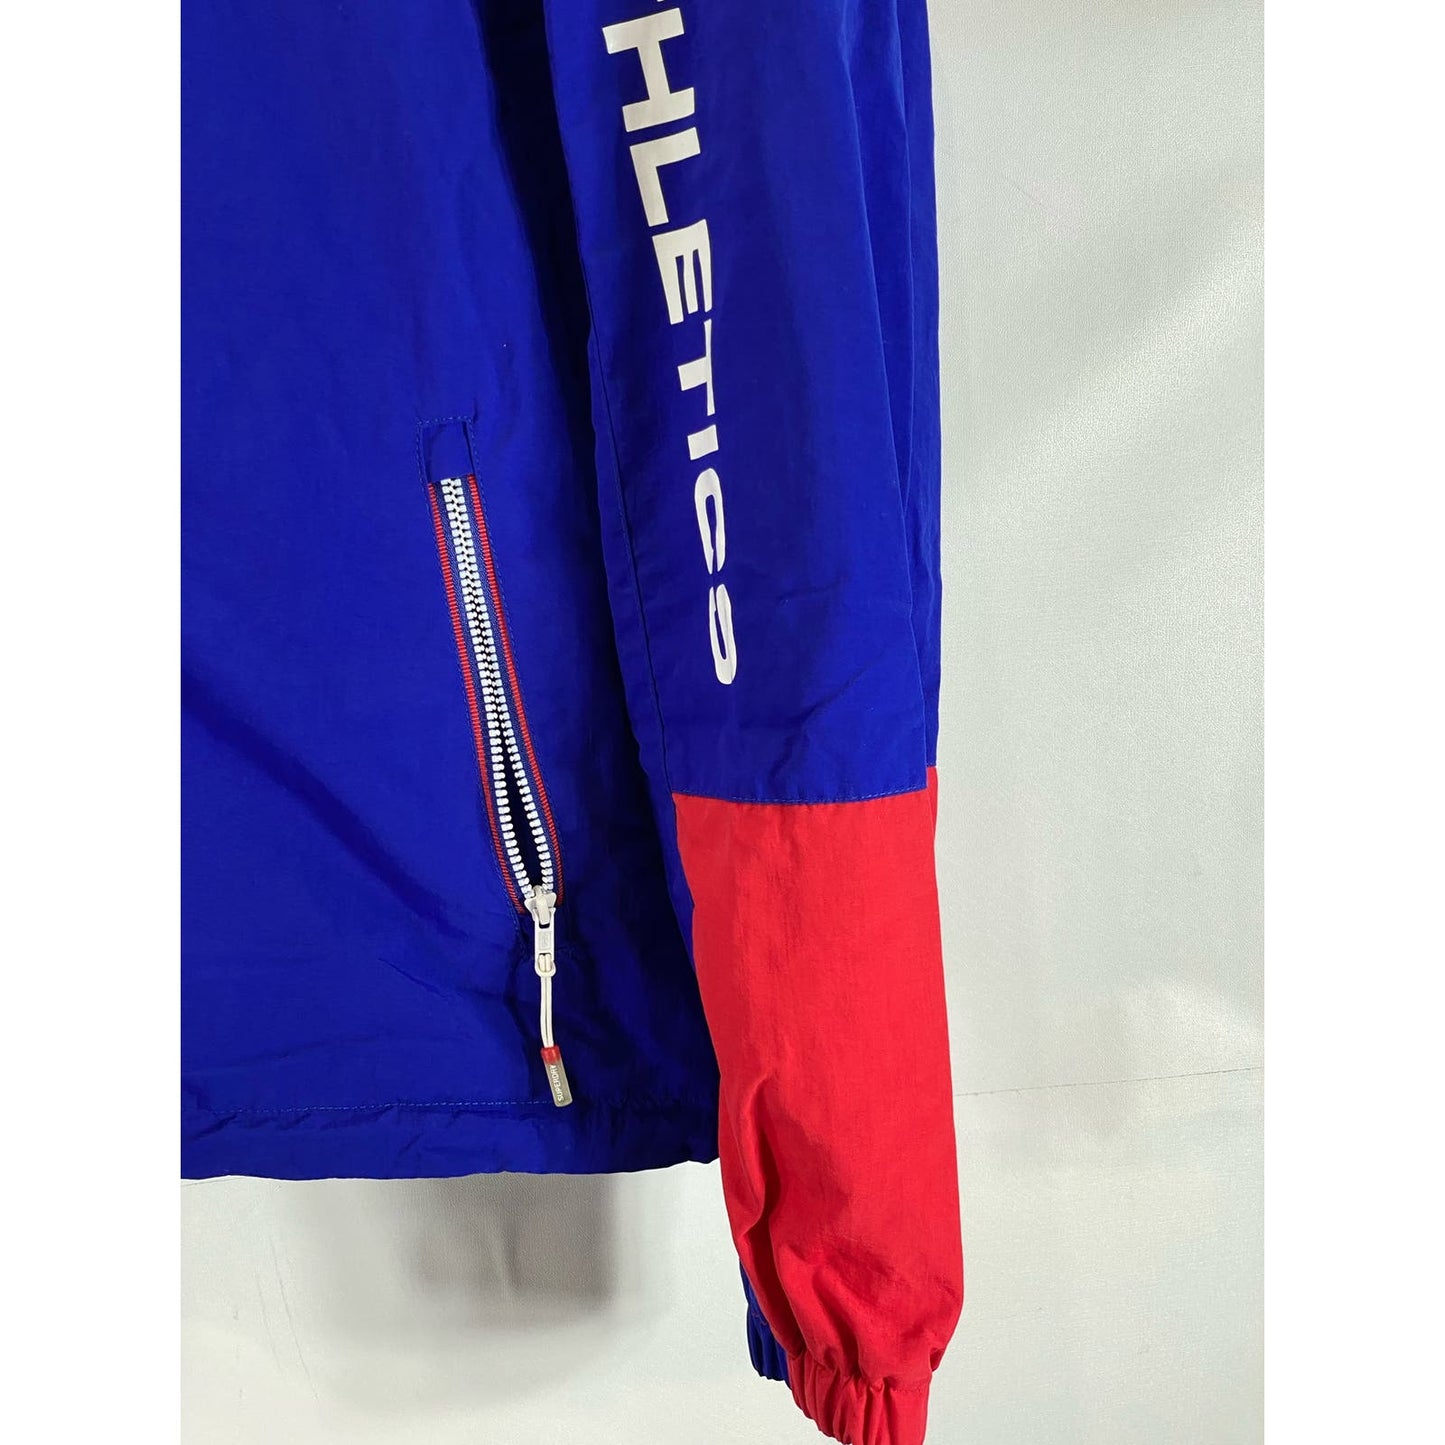 SUPERDRY Men's Red/Blue Drawstring Hood Zip-Up Athletic Jacket SZ XL